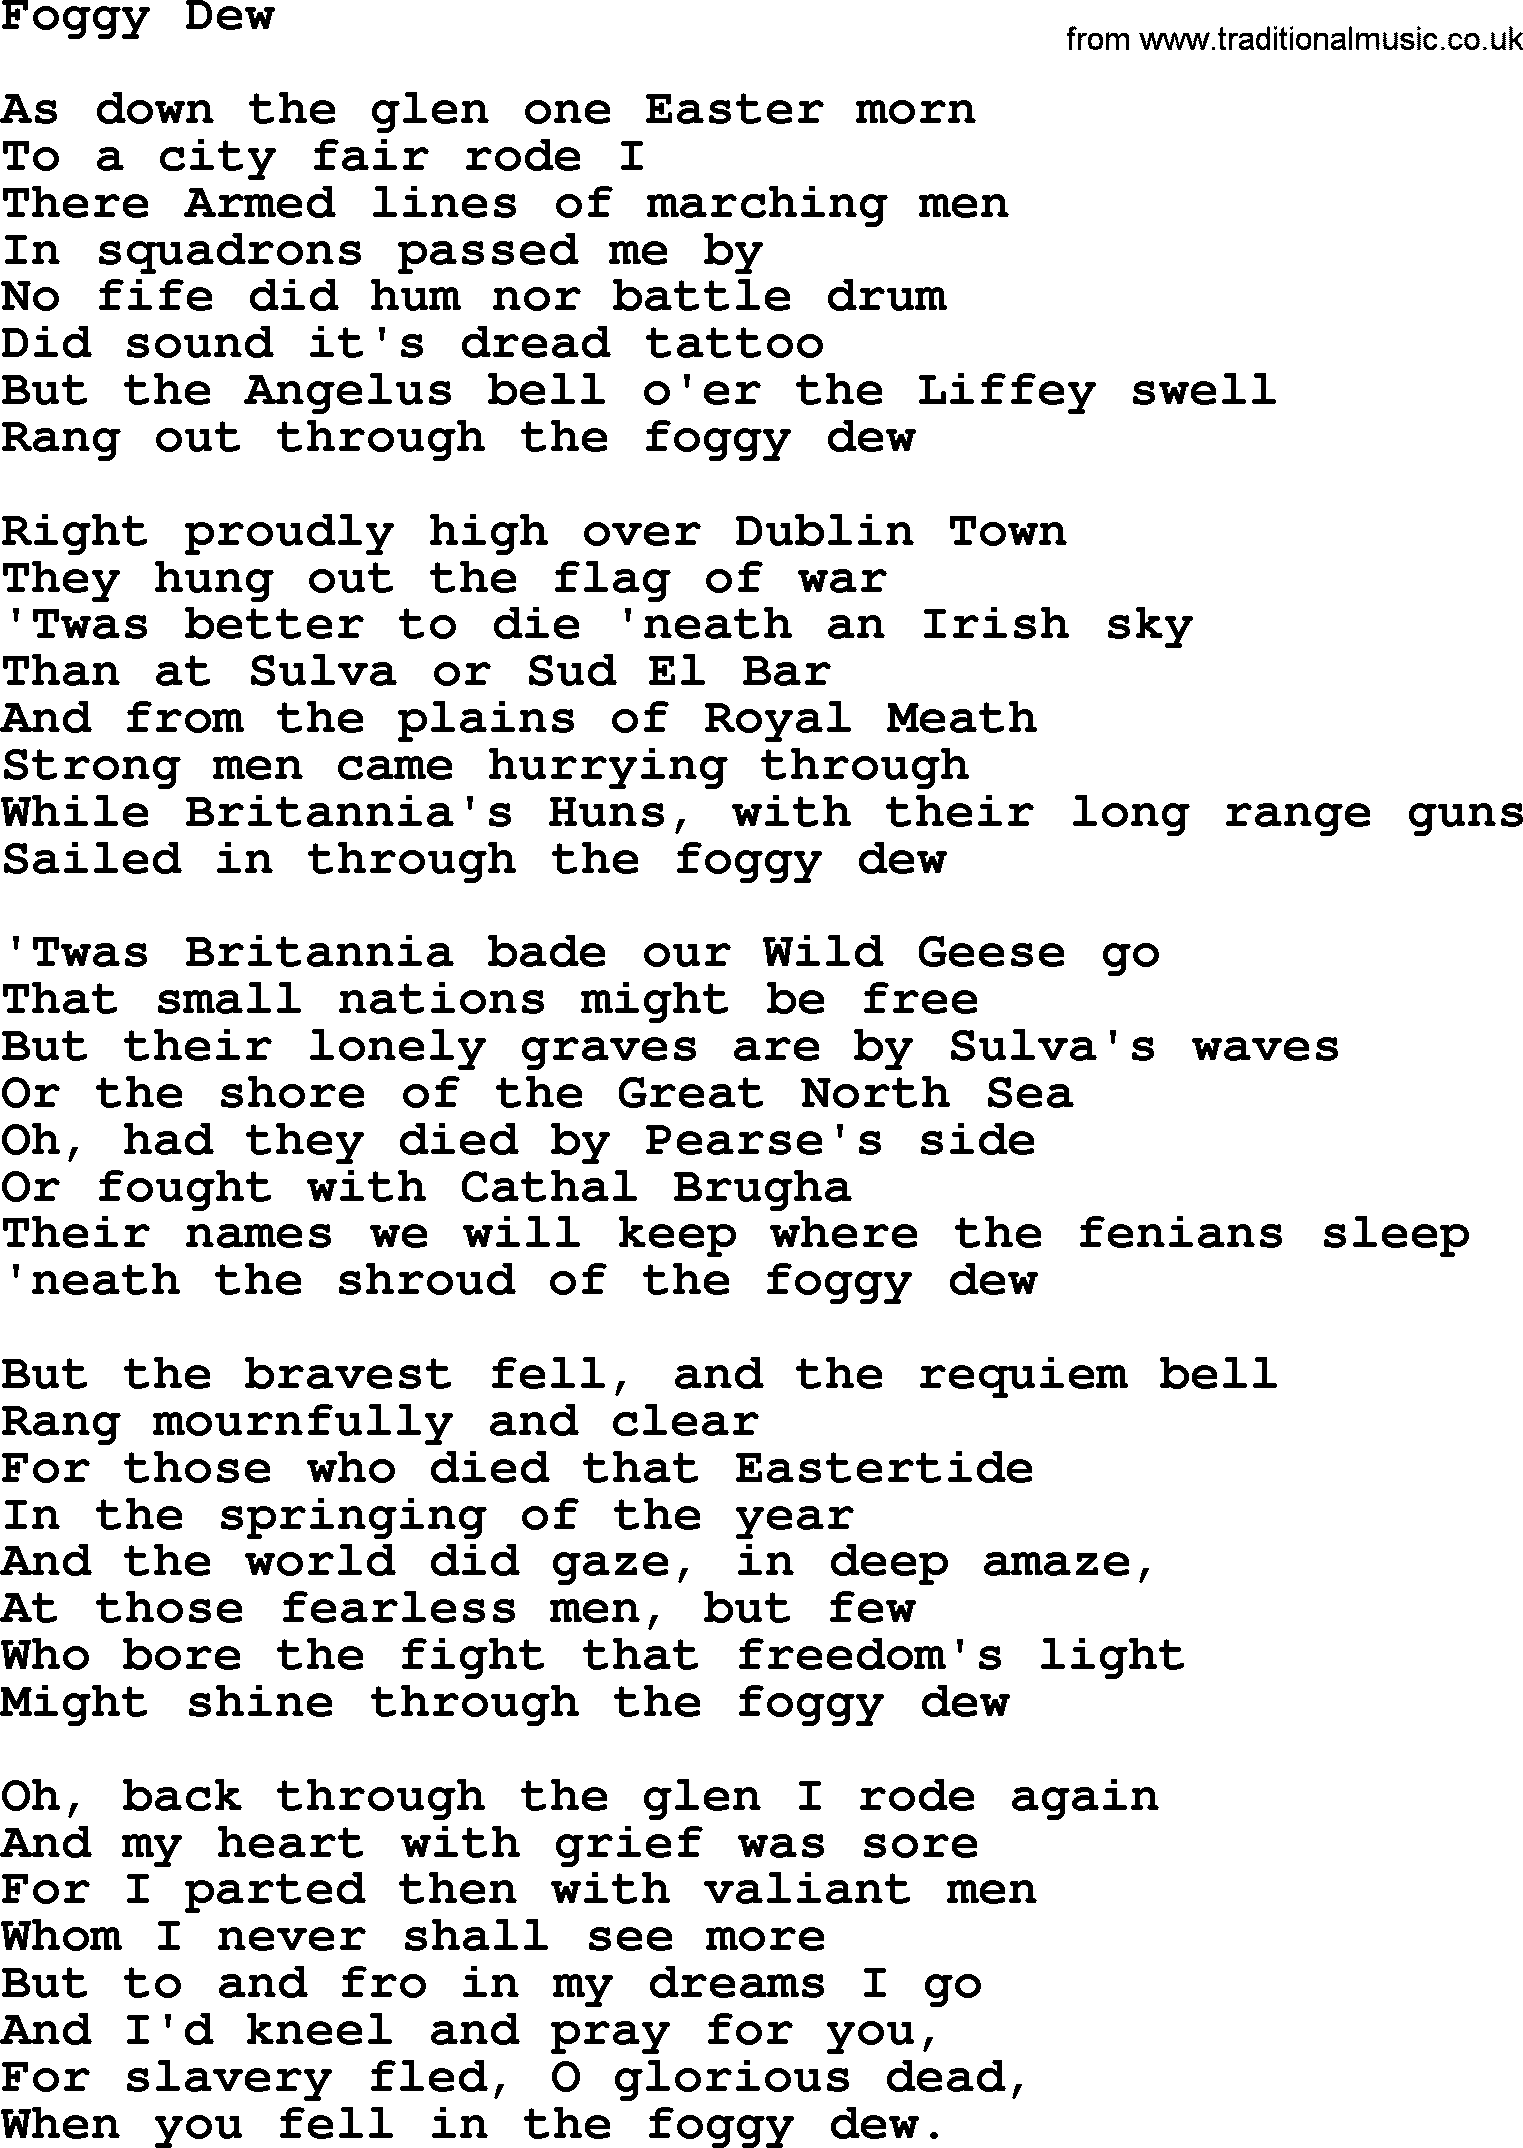 The Dubliners song: Foggy Dew, lyrics